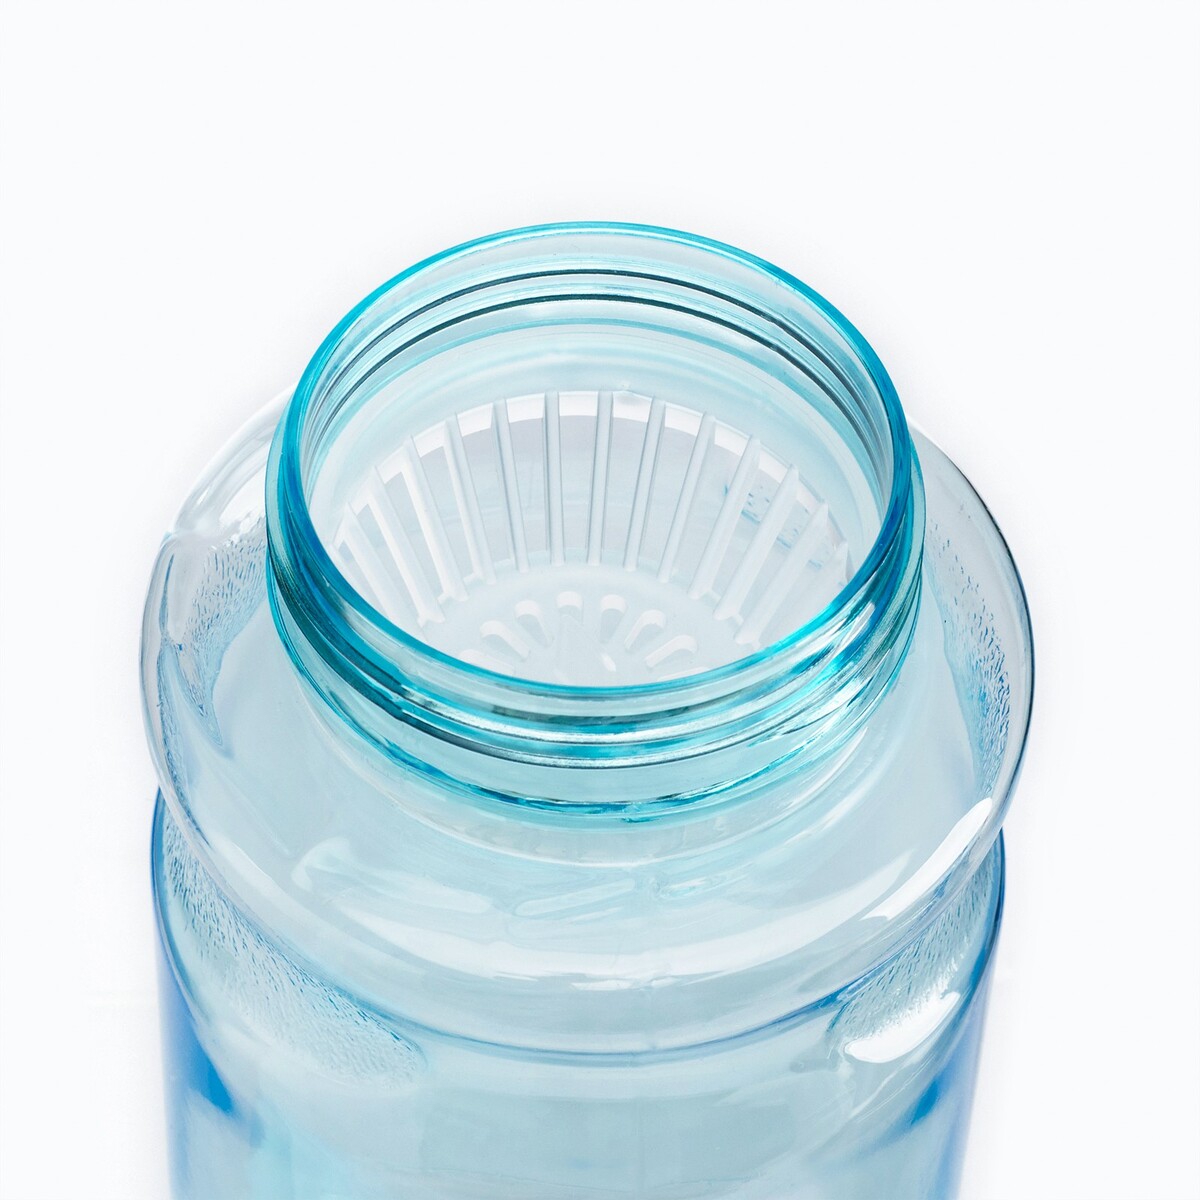 фото Бутылка для воды, 1.3 л, portable no brand